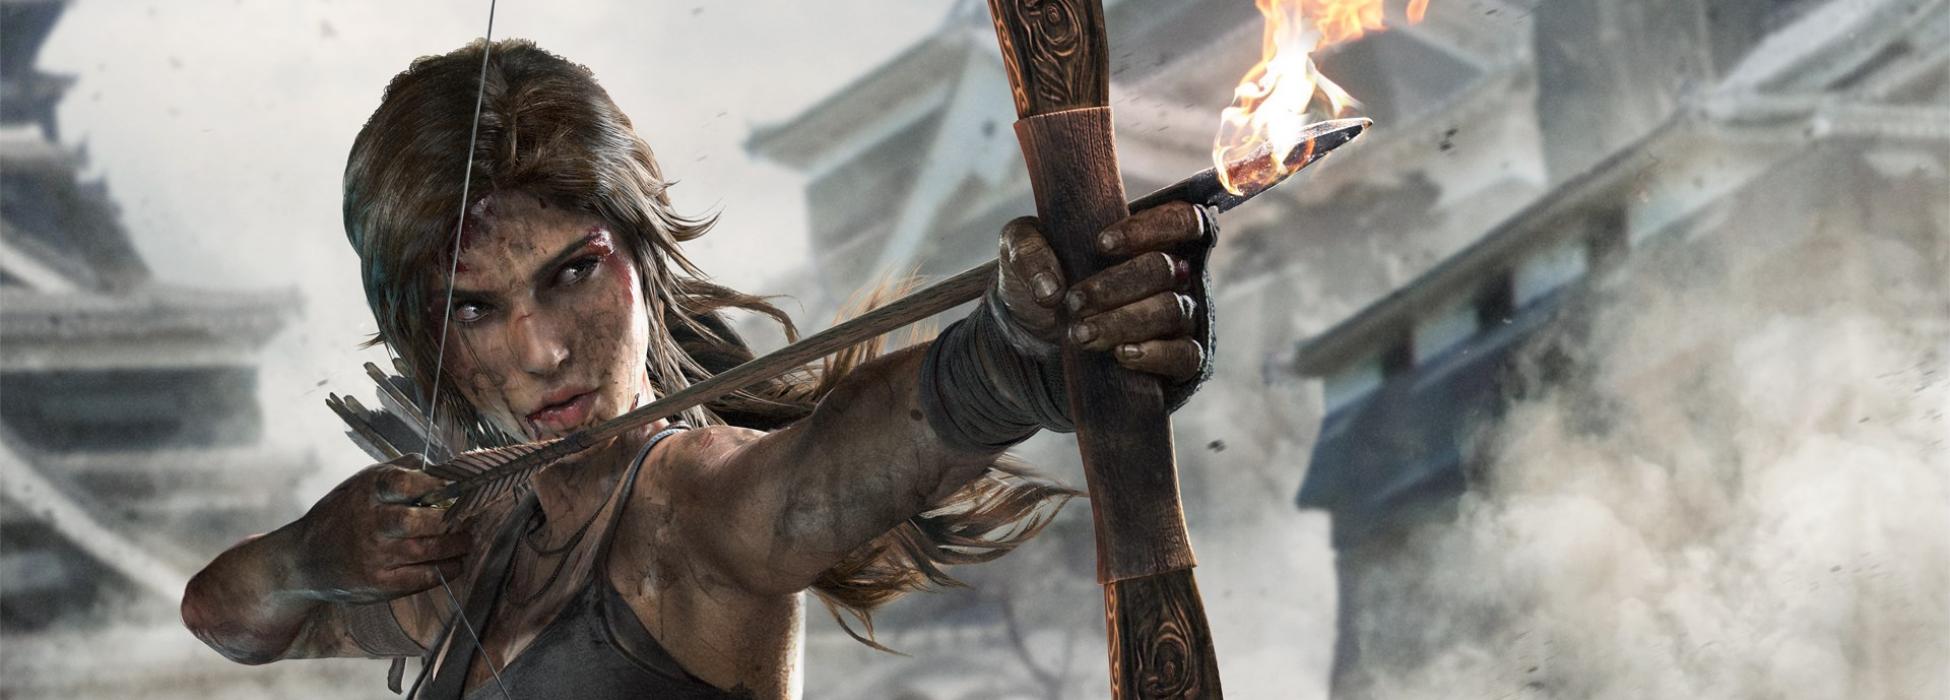 Lara Croft aus "Tomb Raider"